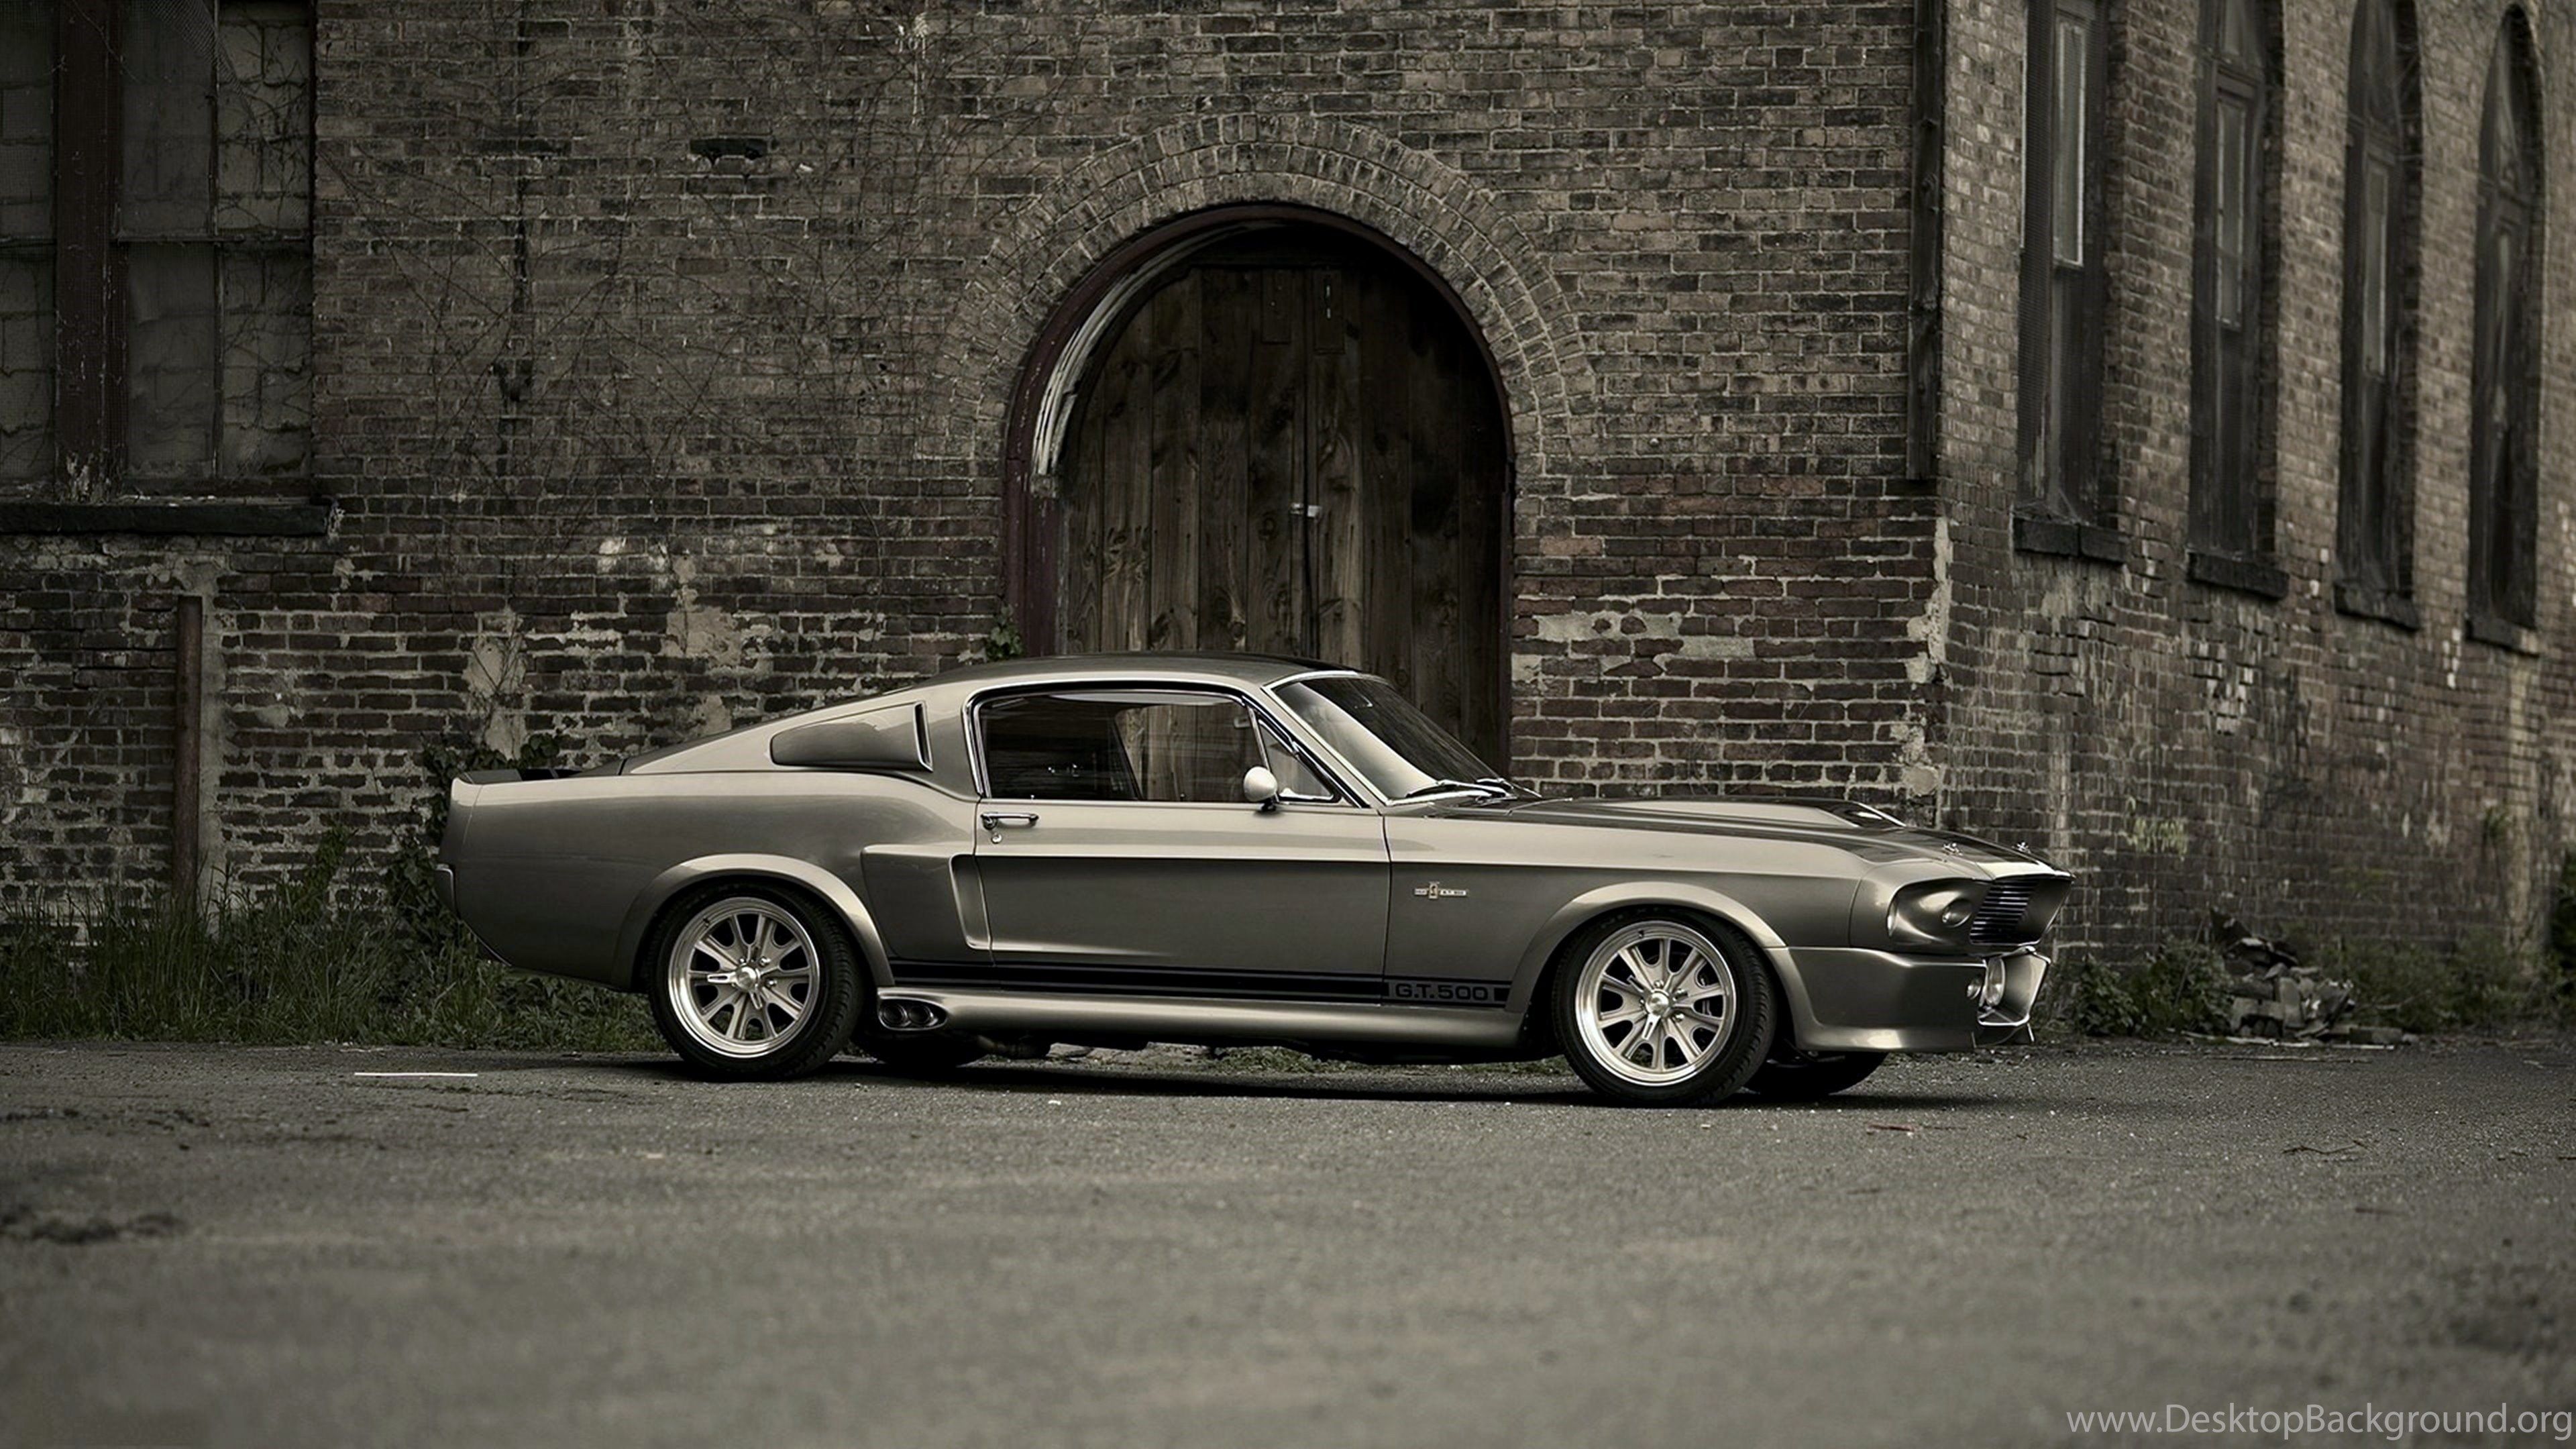 Ford Mustang Shelby GT500 HD Wallpaper Desktop Background